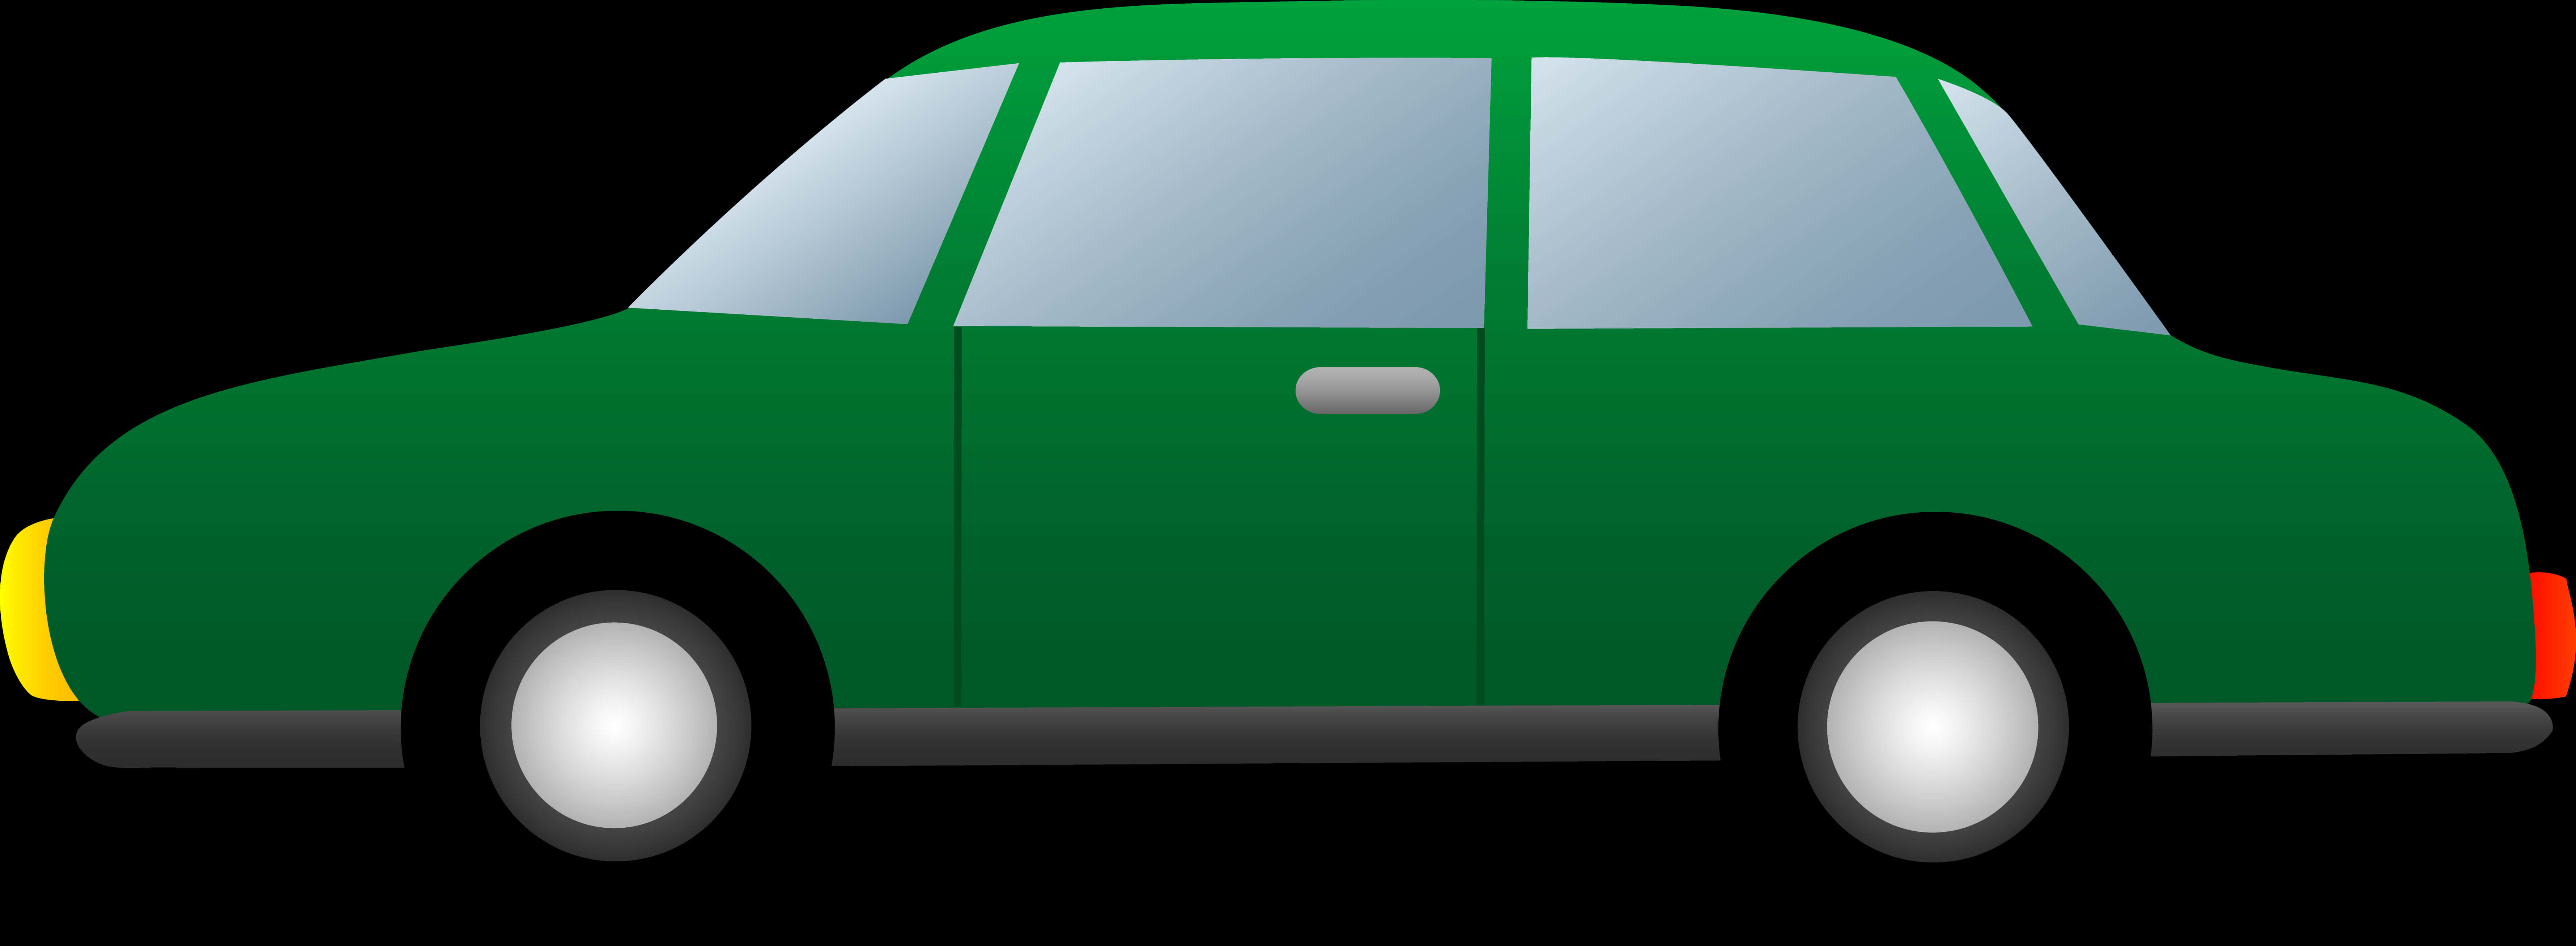 Green Sedan Vector Illustration PNG image